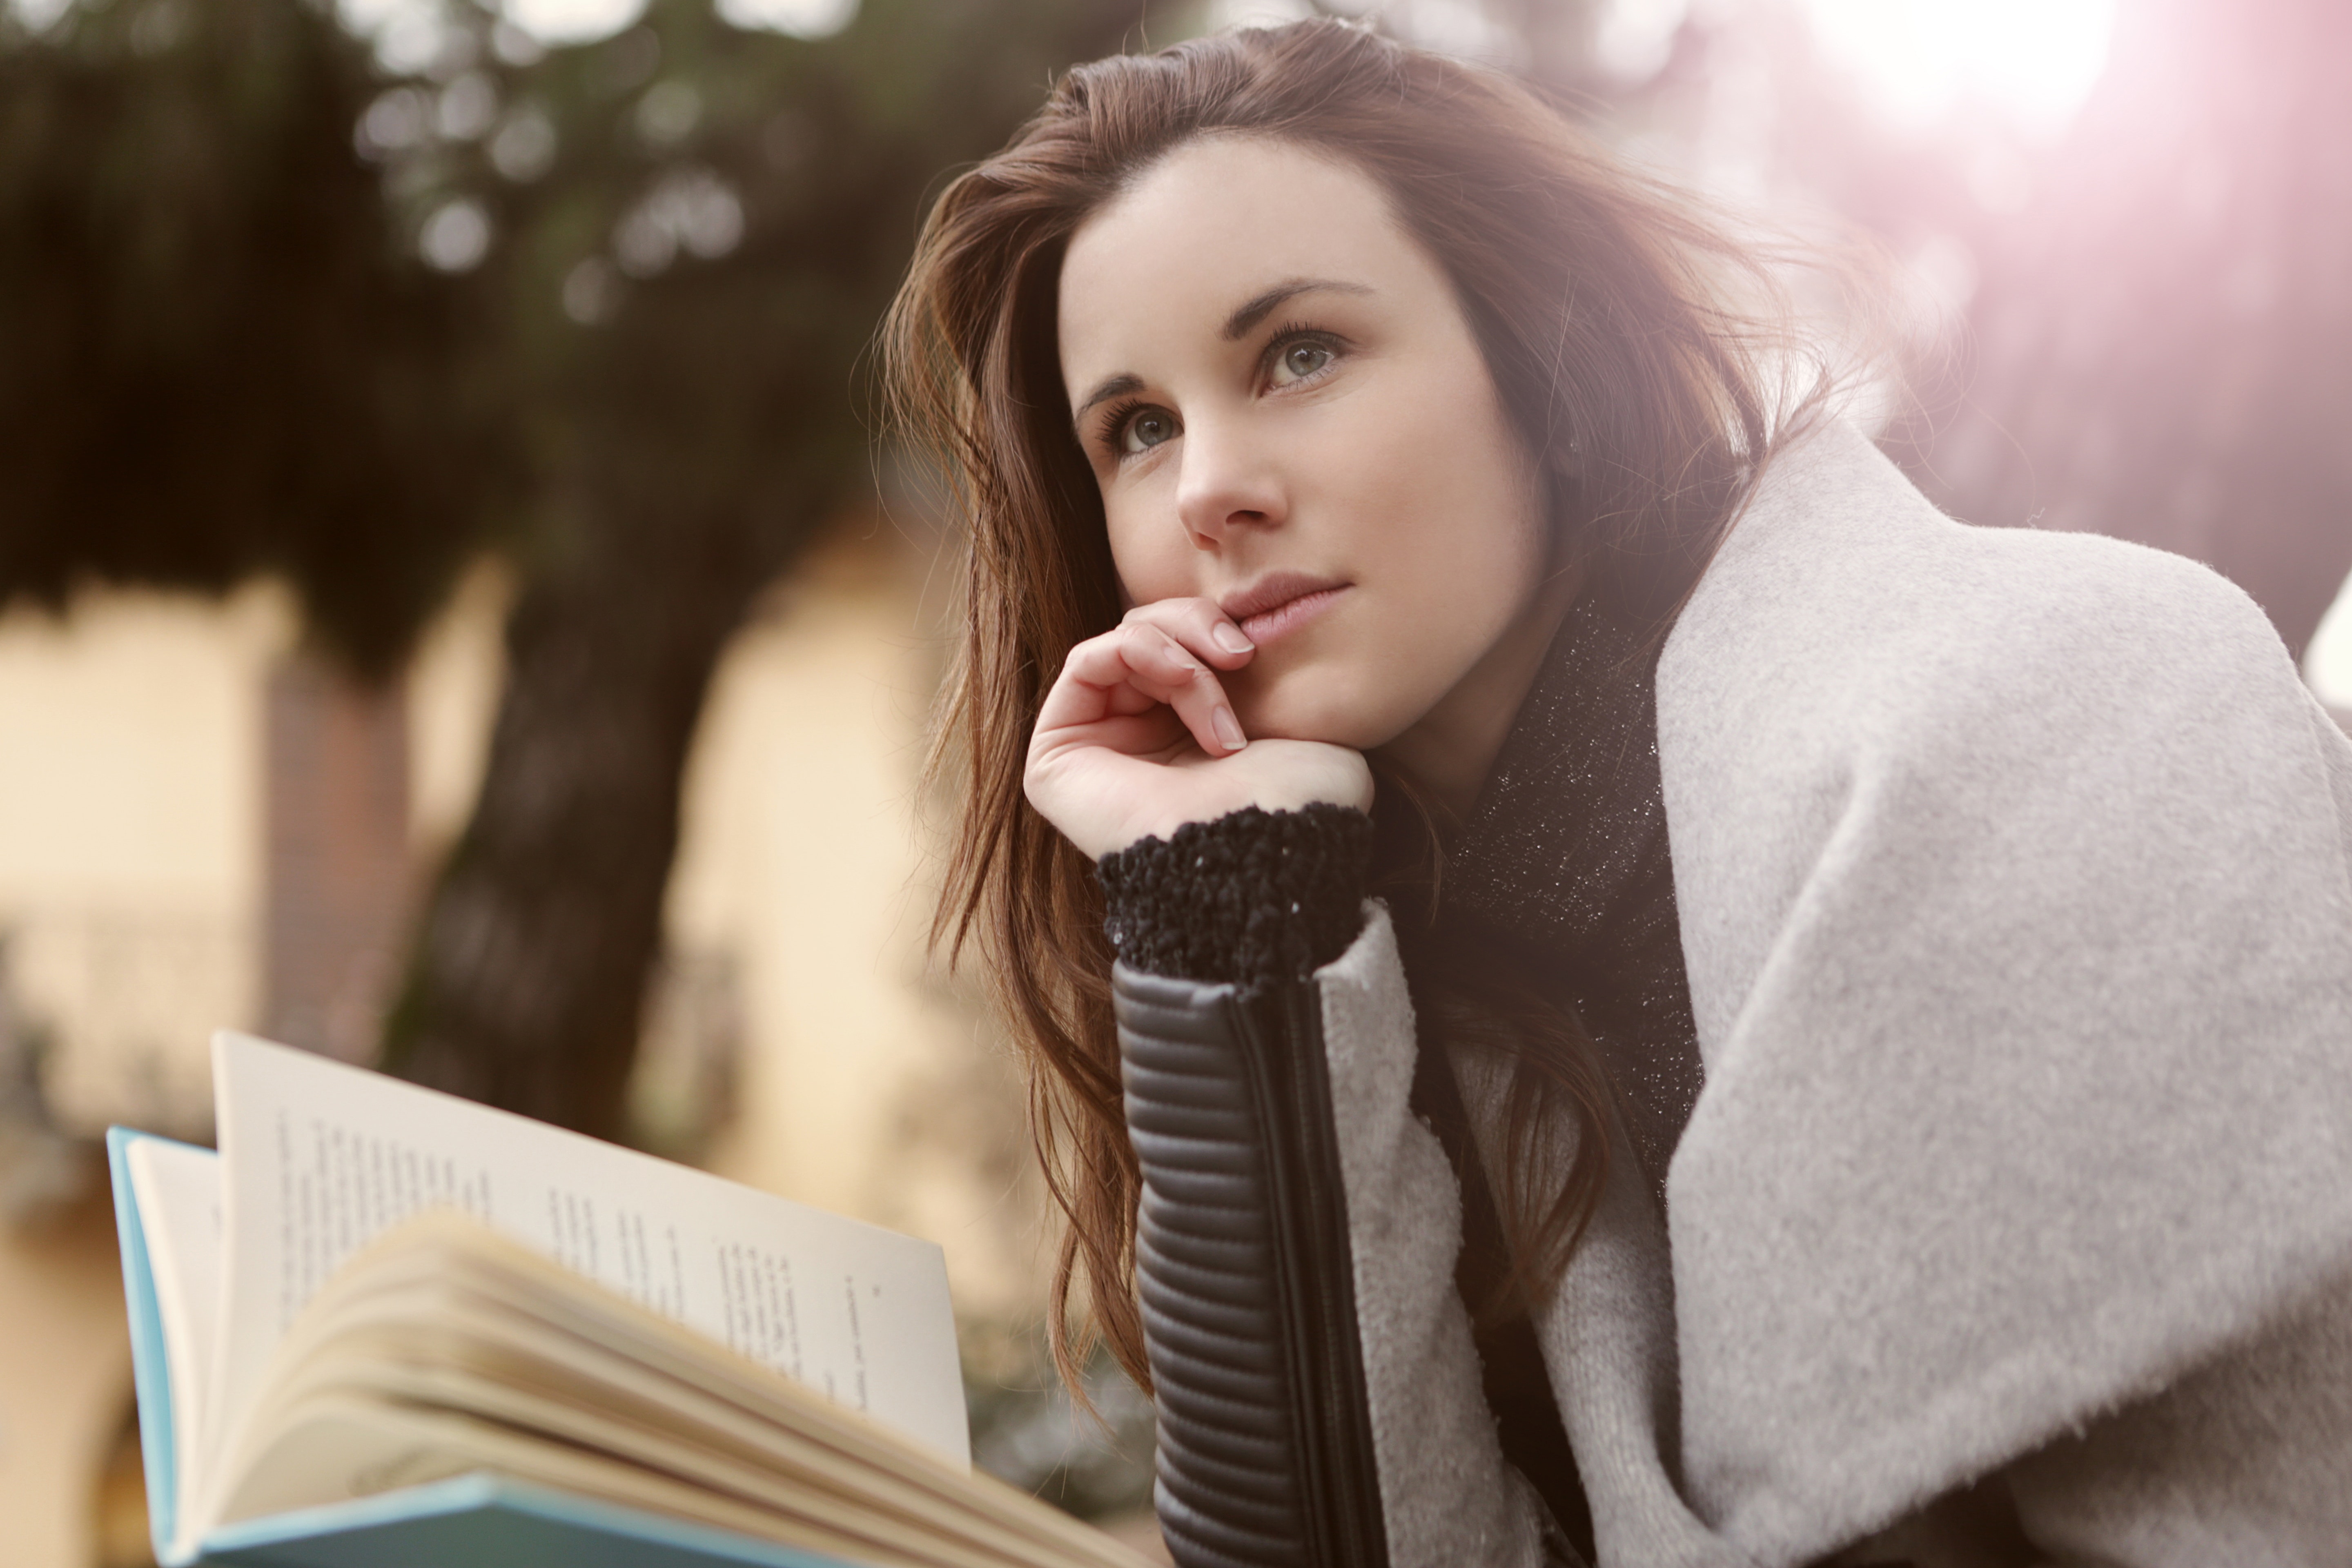 pensive woman in grey coat reading book